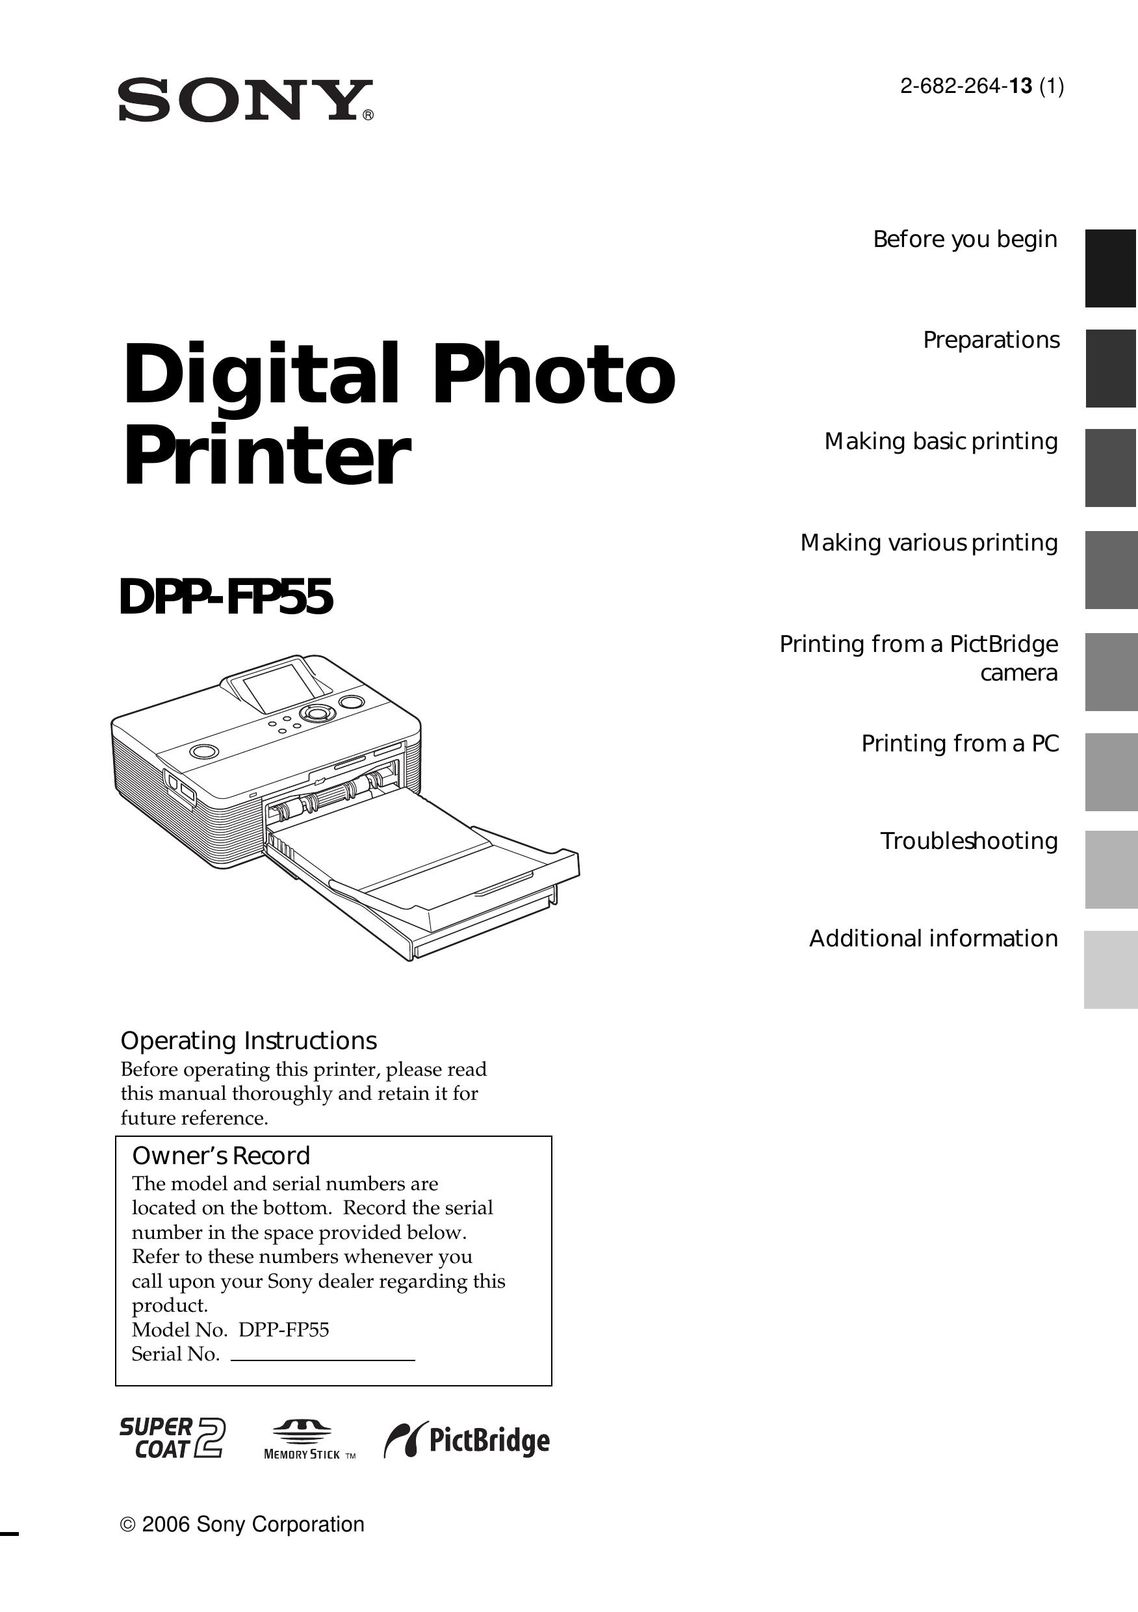 Sony DPP-FP55 Printer User Manual